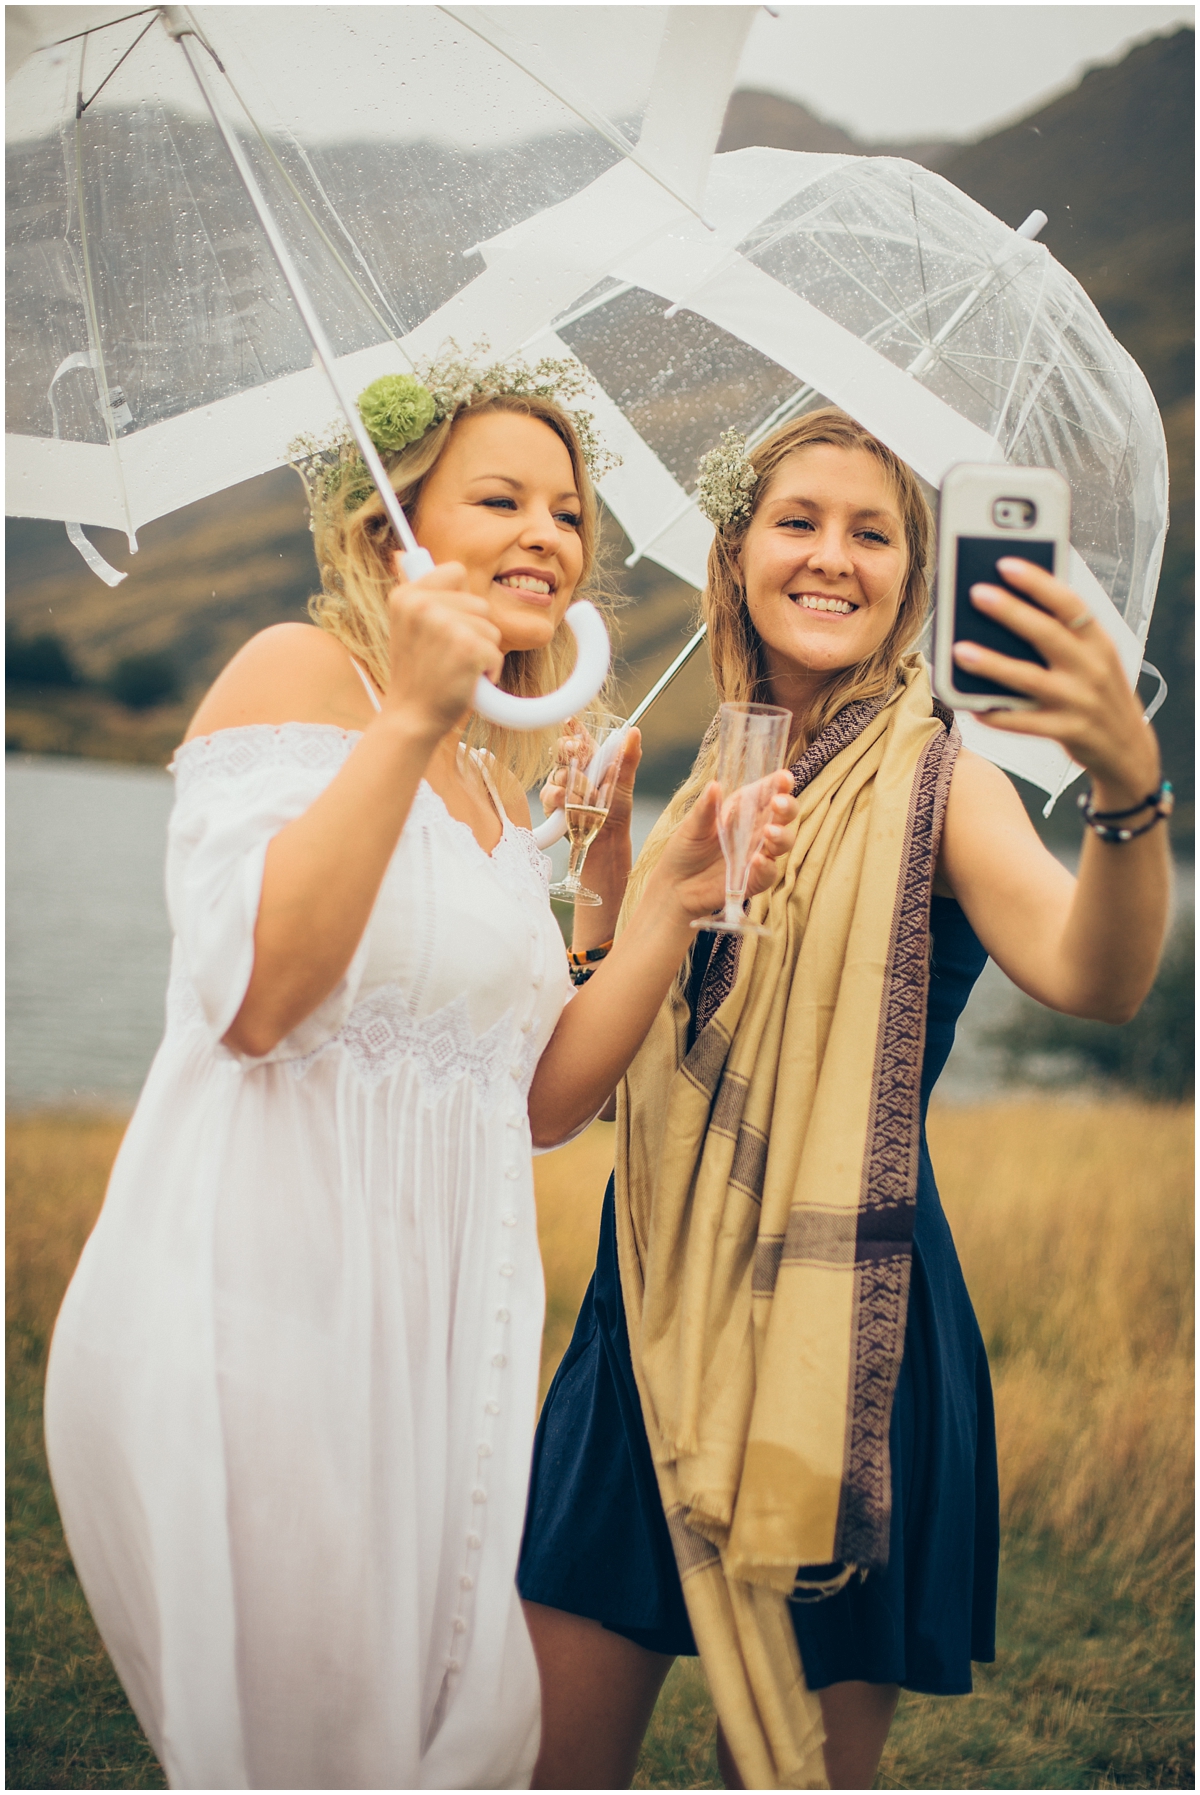 Bride and her friend take a selfie in the rain under umbrellas